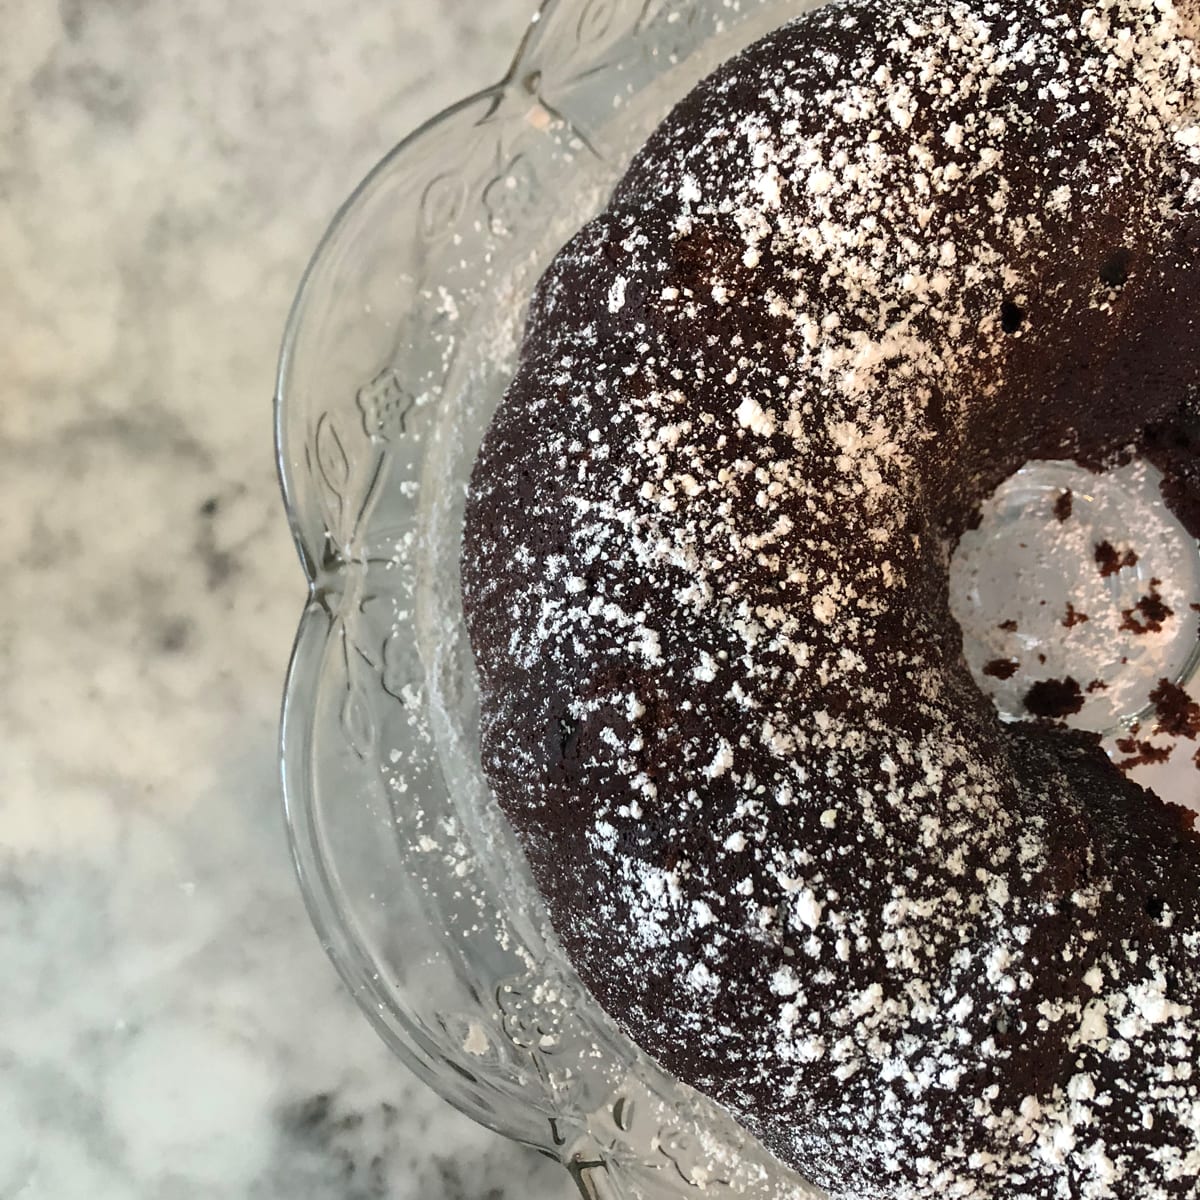 Instant Pot Chocolate Bundt Cake Recipe - Through My Front Porch